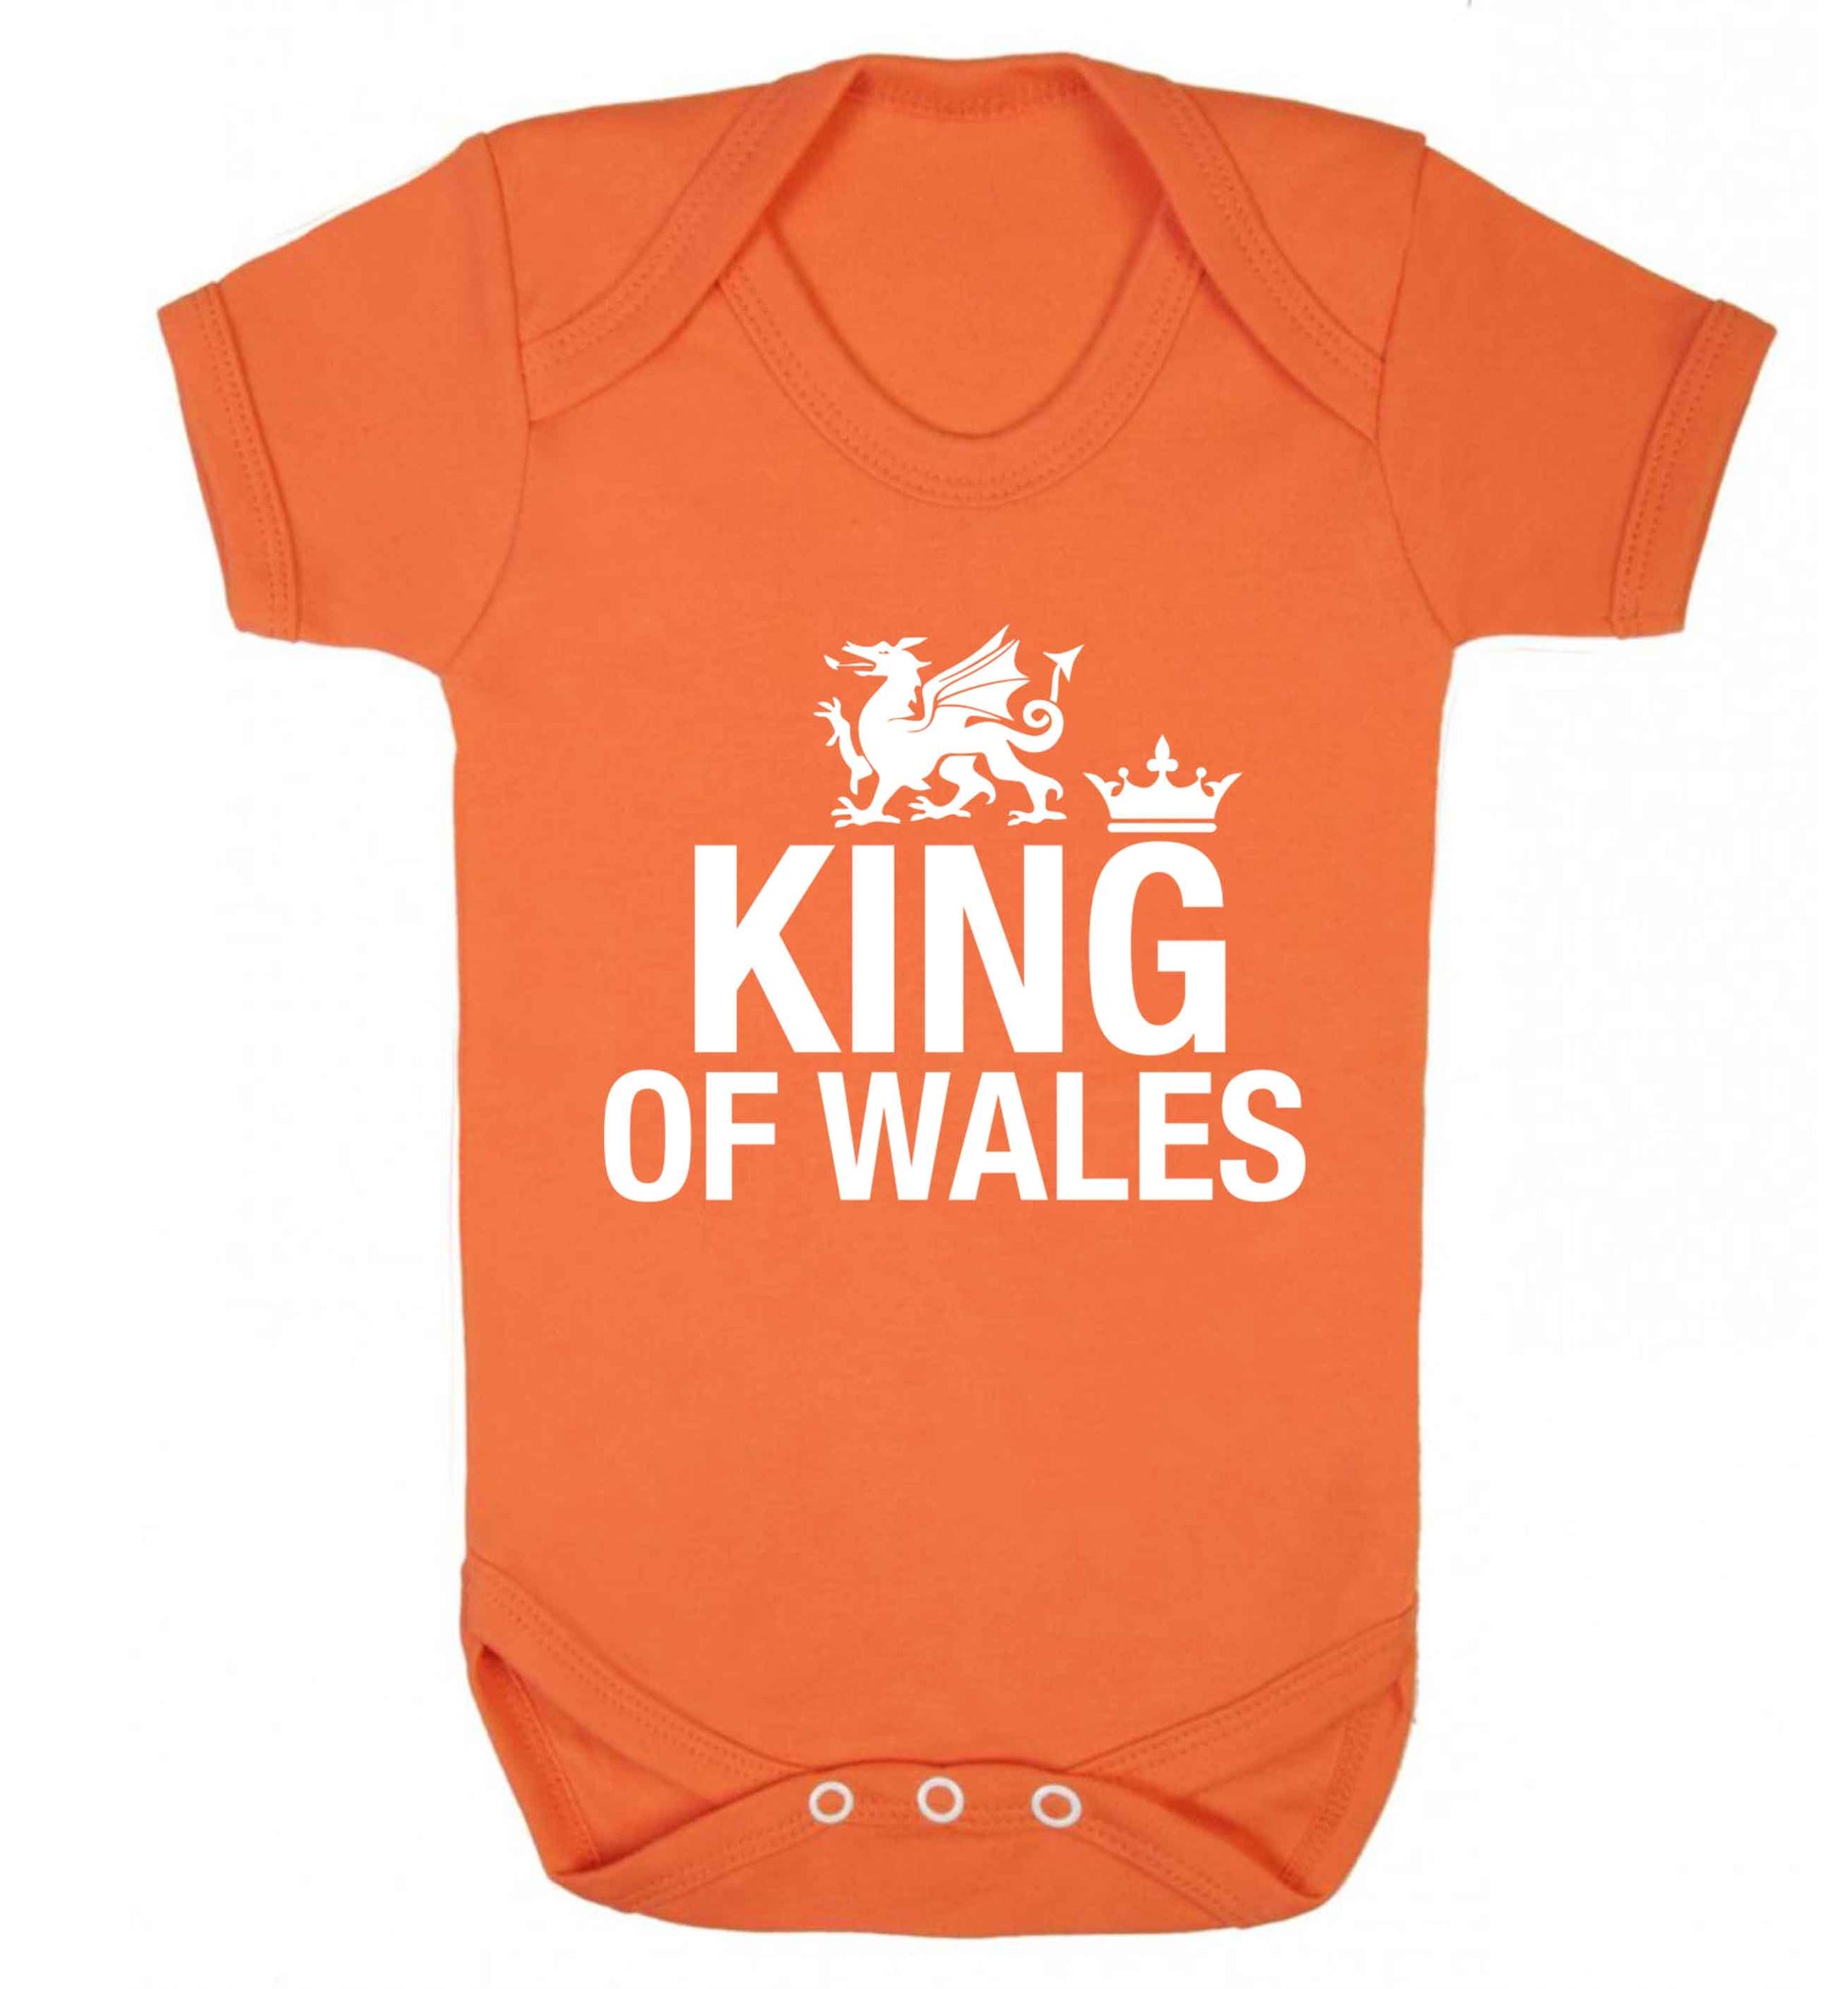 King of Wales Baby Vest orange 18-24 months